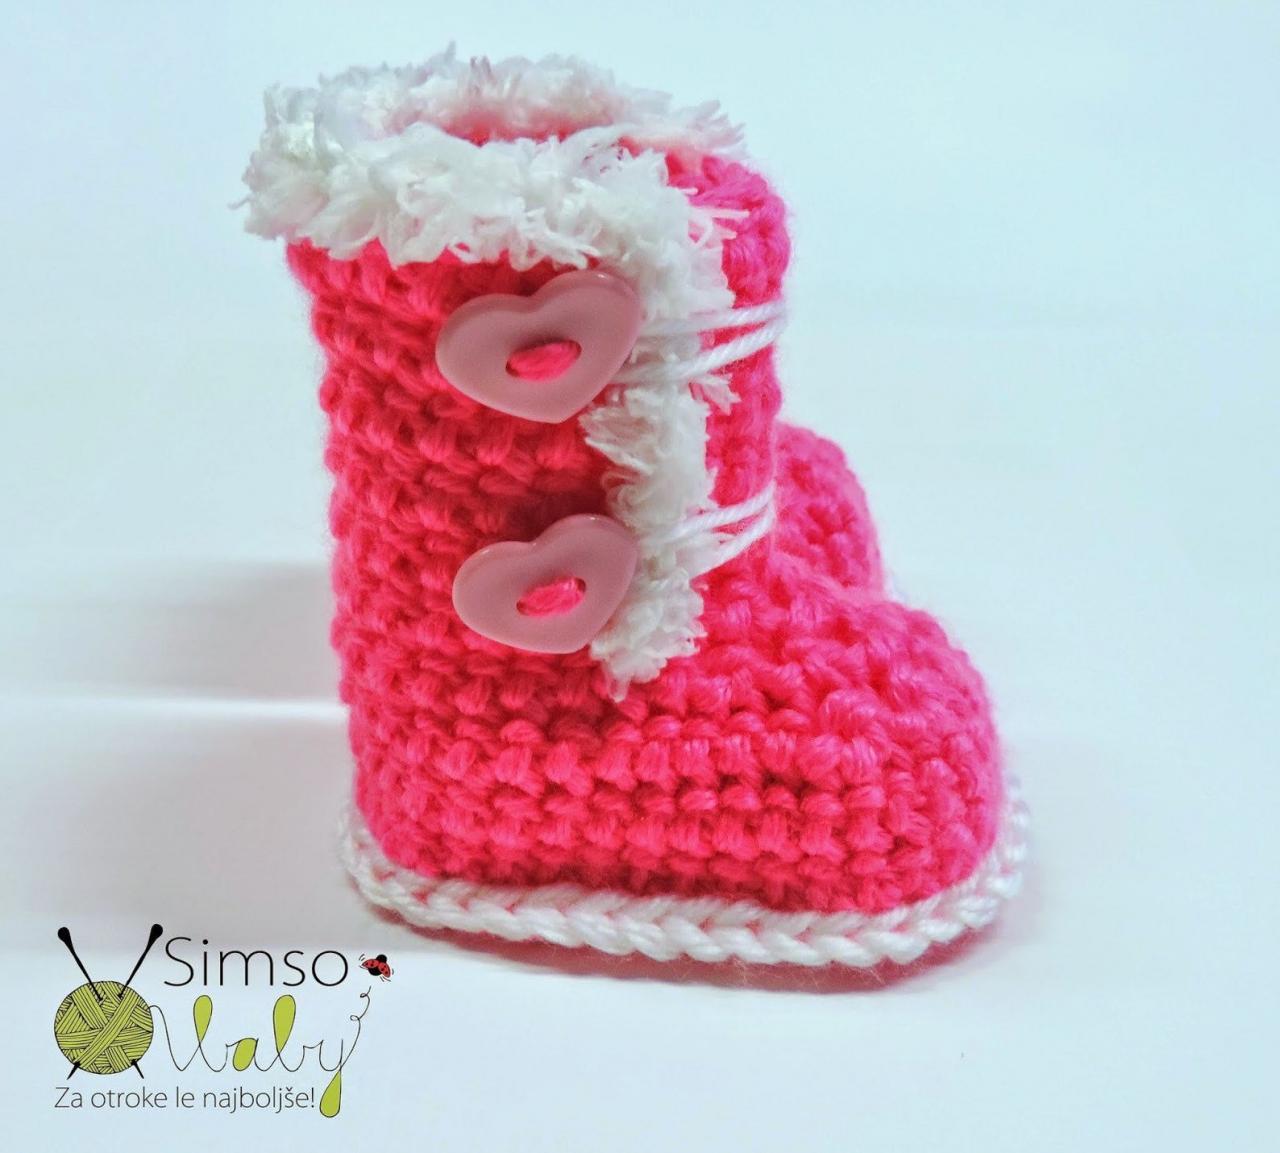 Crocheted slippers - soft wool yarn - winter edition 2019 (baby slippers, wool, baby gift, newborn, boy, girl)